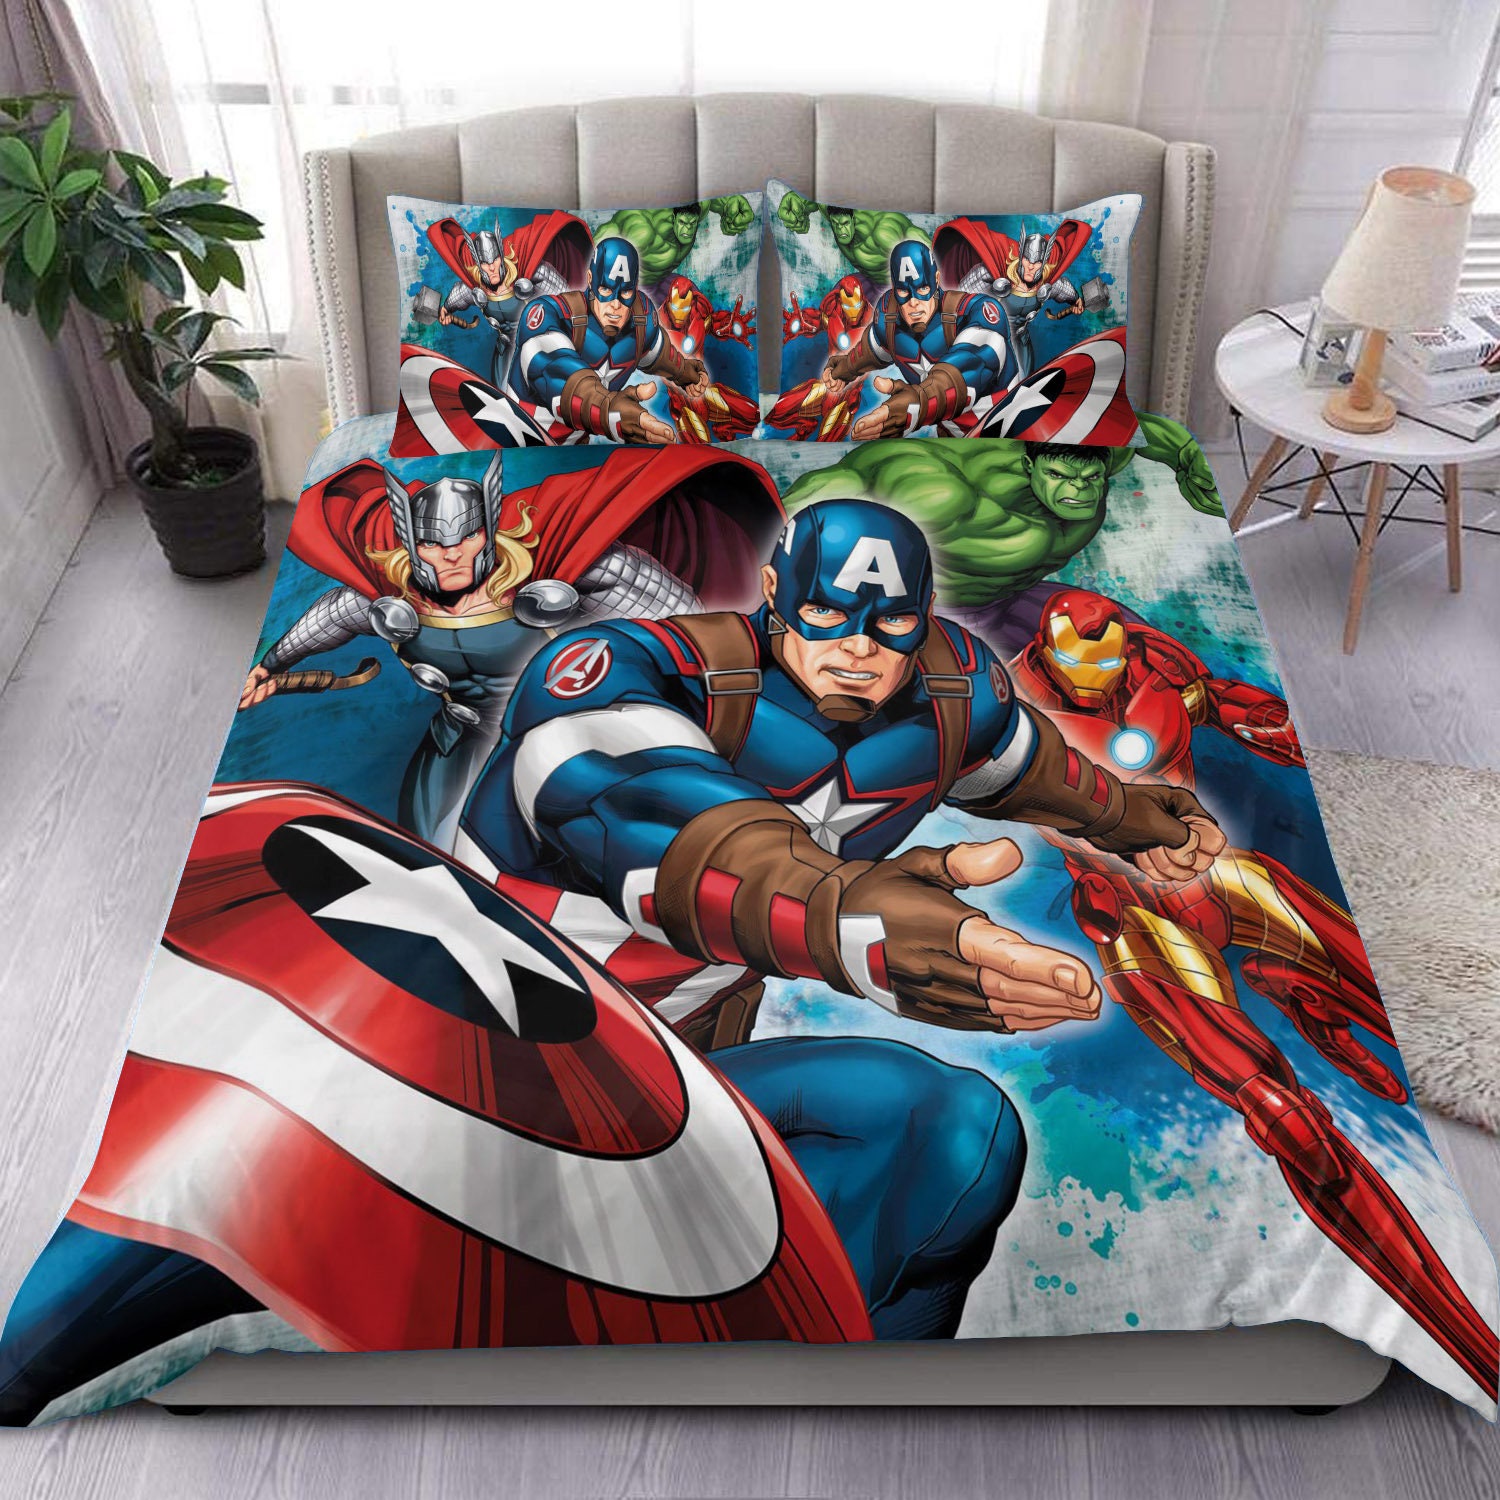 Avengers Captain America Super Hero Bedding Set Disney Graphic Cartoon